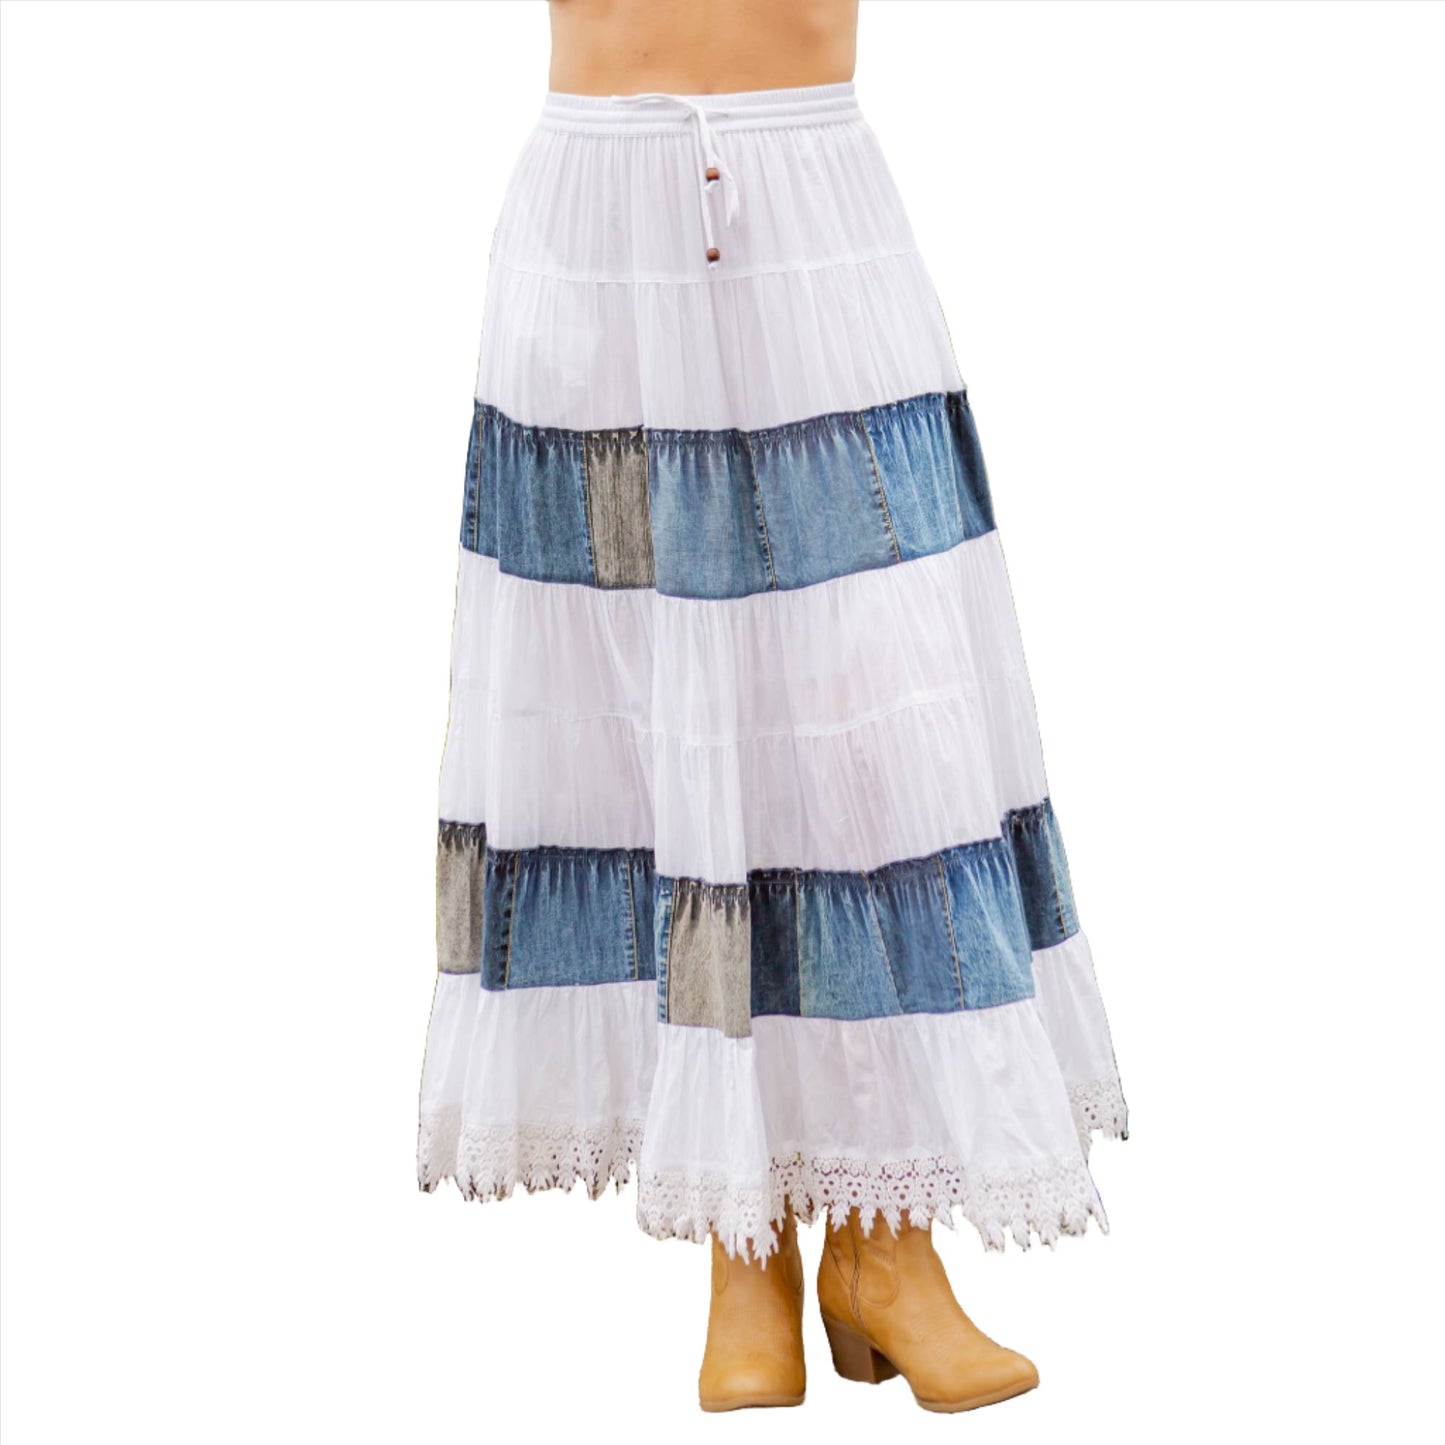 Jerra's Tiered Western Skirt